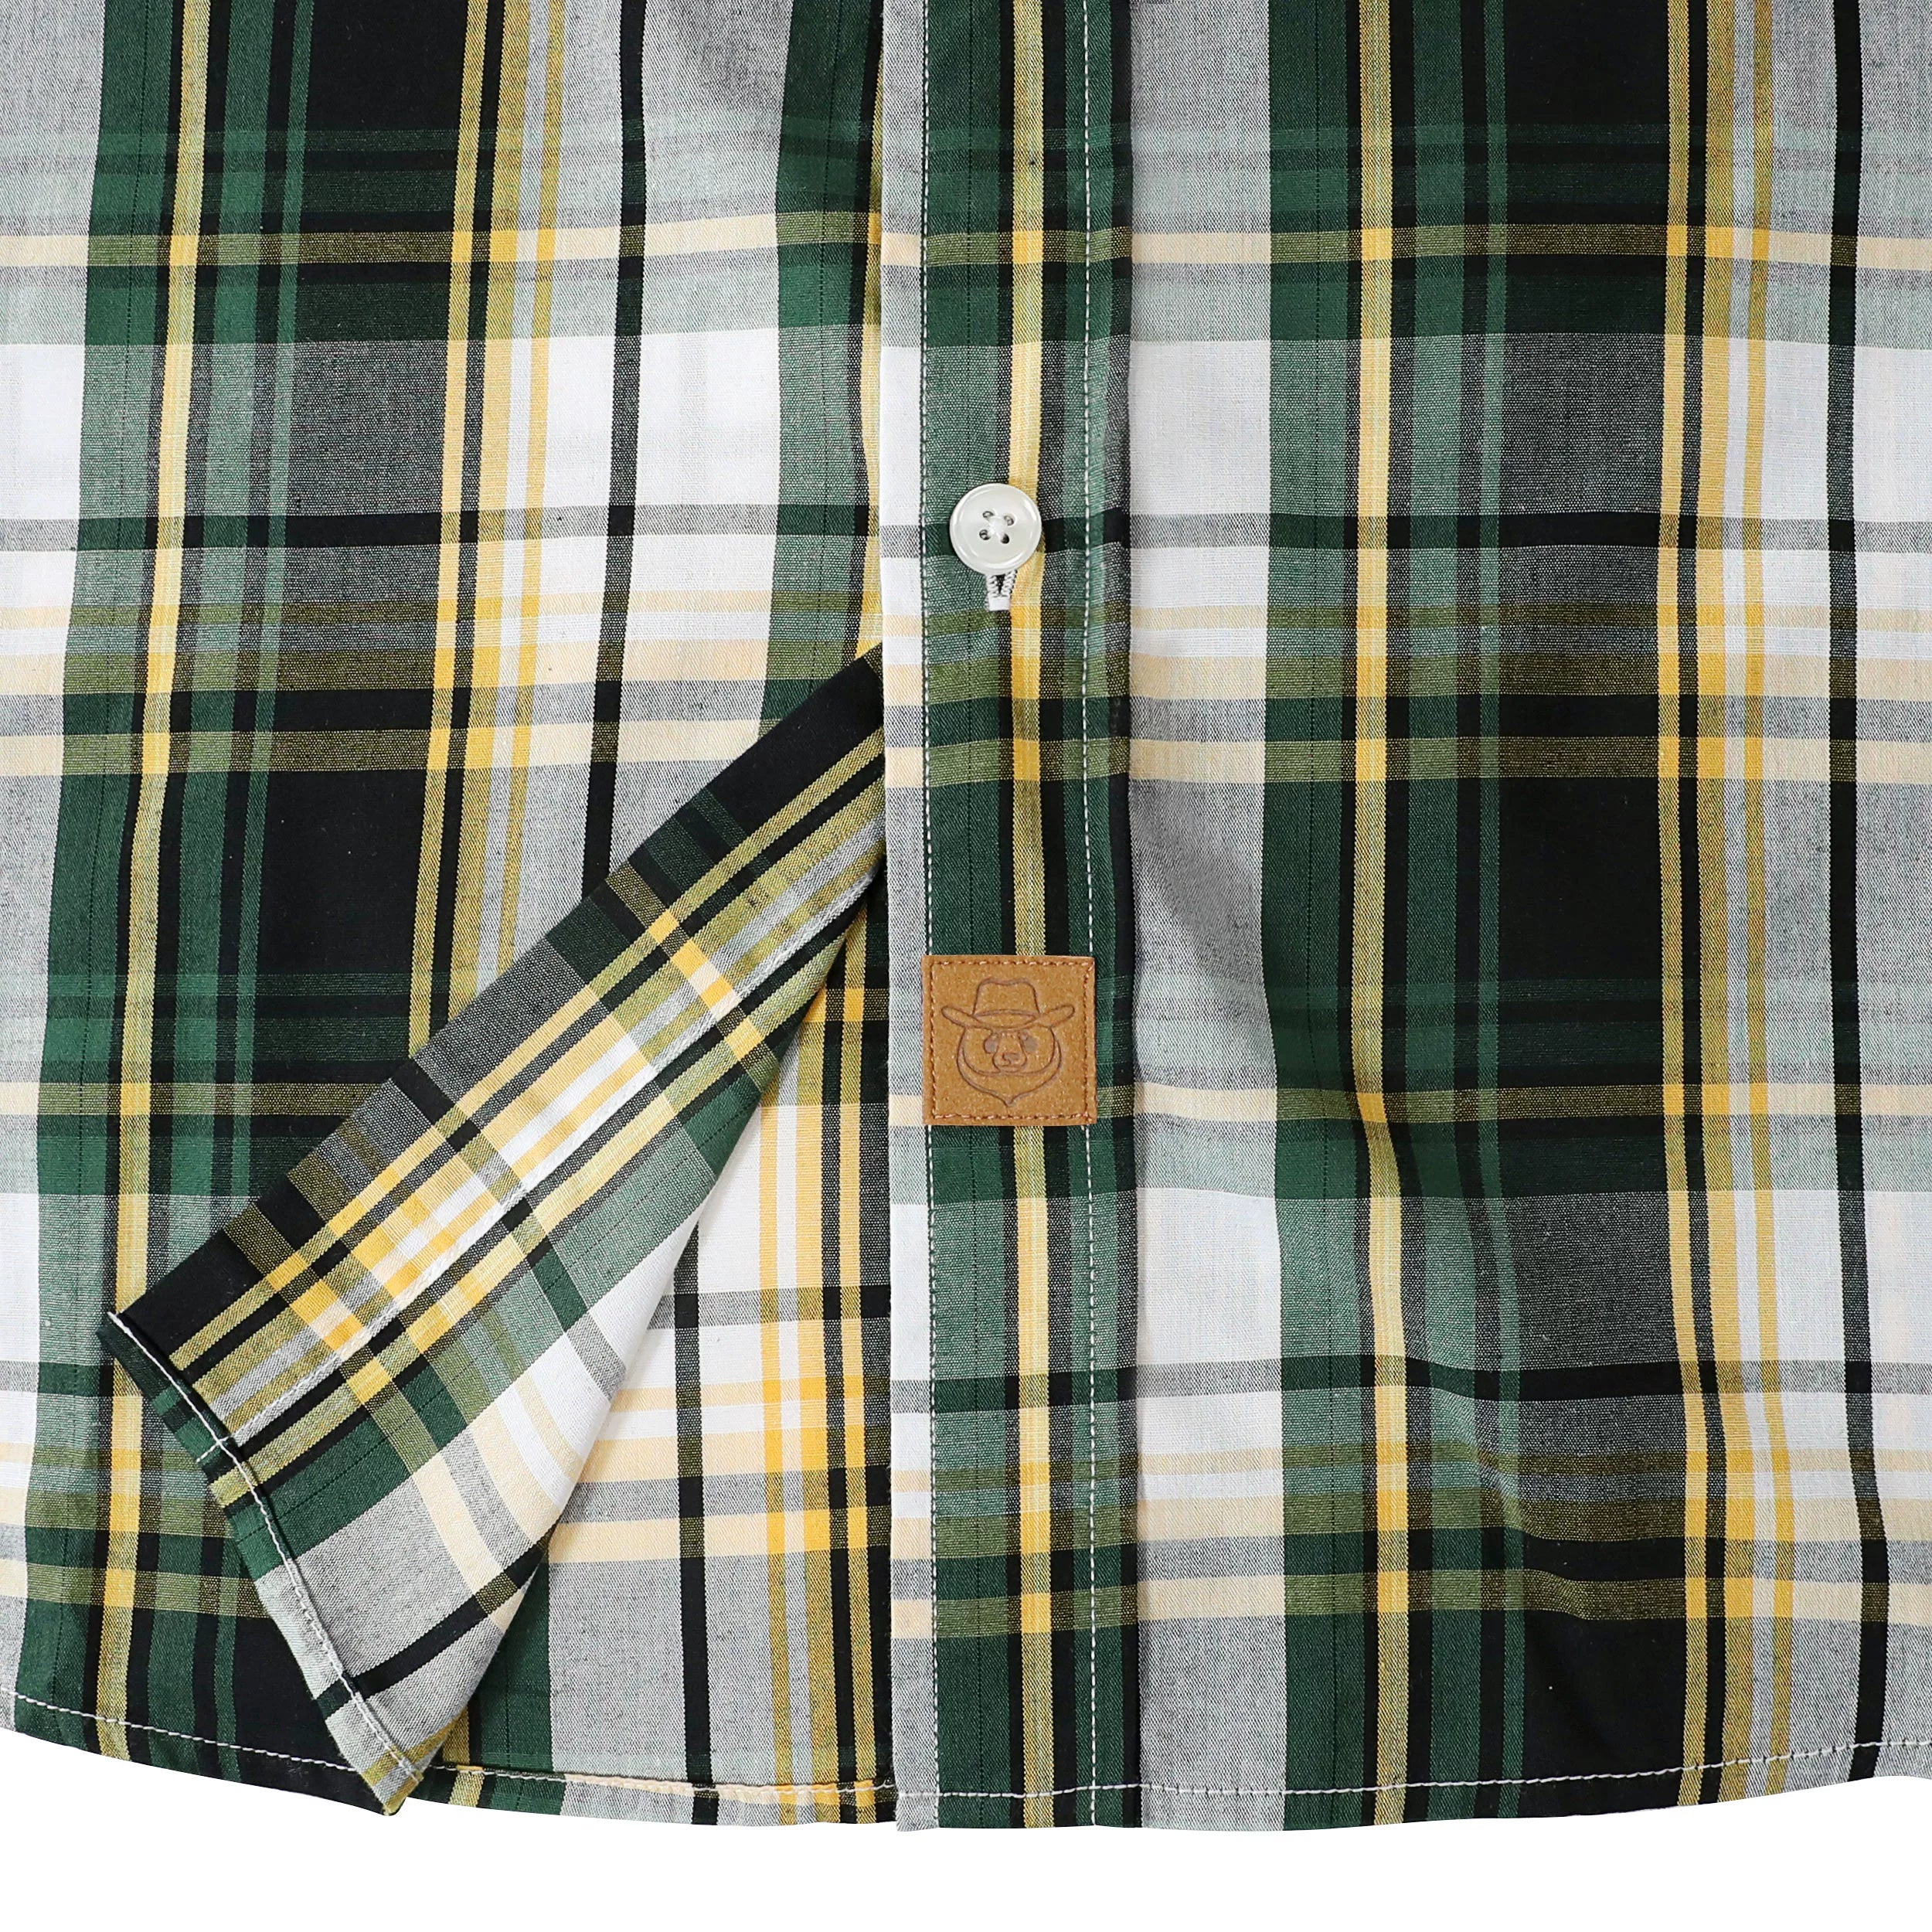 Dubinik®Mens Shirts Long Sleeve Shirts For Men Casual Button Down Vintage Plaid Pocket Soft Mens Button Up Shirts Long Sleeve#52004